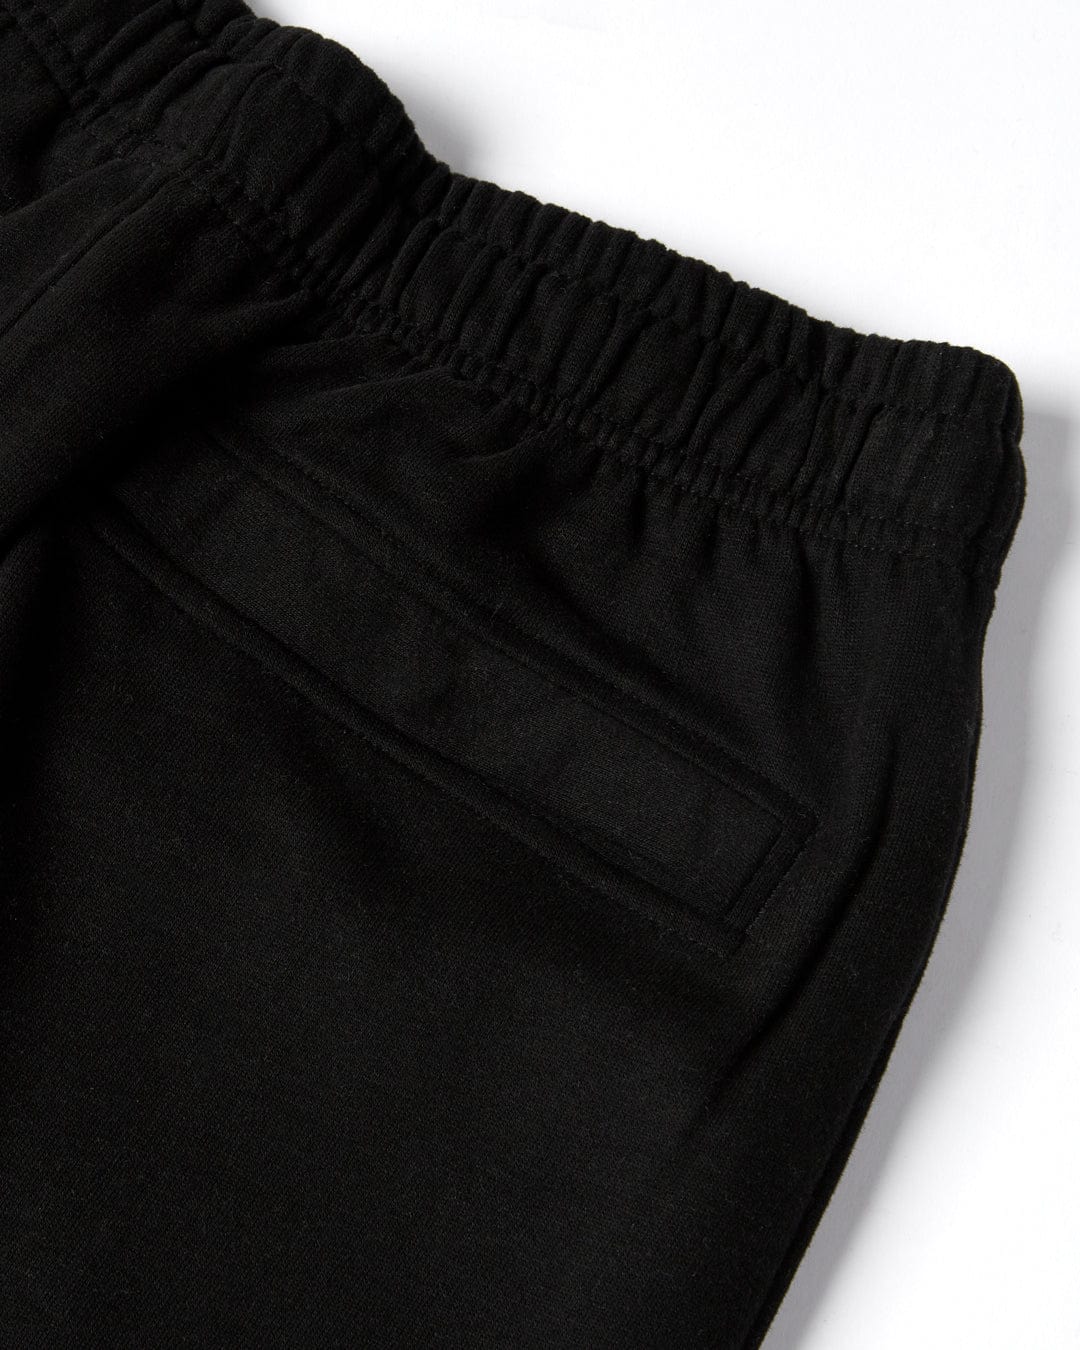 Close-up of a Saltrock Original - Mens Joggers - Black with Saltrock branding, elastic waistband, and pocket detail.